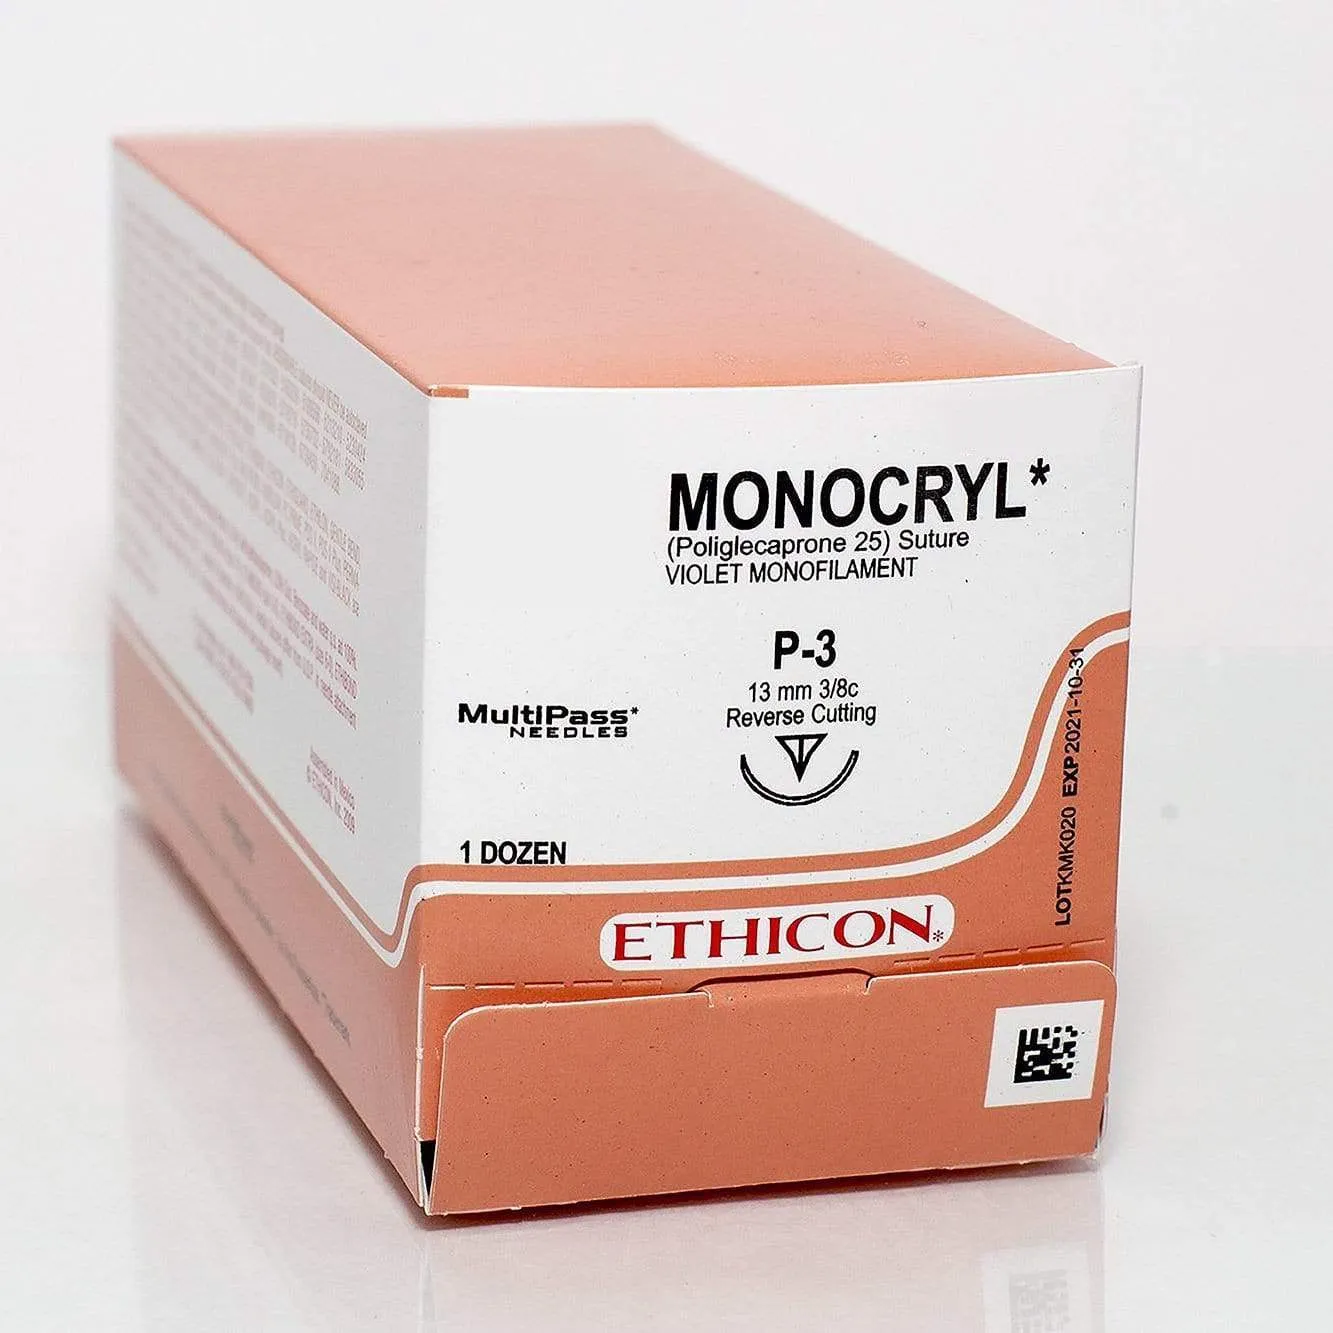 Ethicon Monocryl Sutures USP 5-0, 3/8 Circle Reverse Cutting P-3 Prime - W3203 -12 Foils